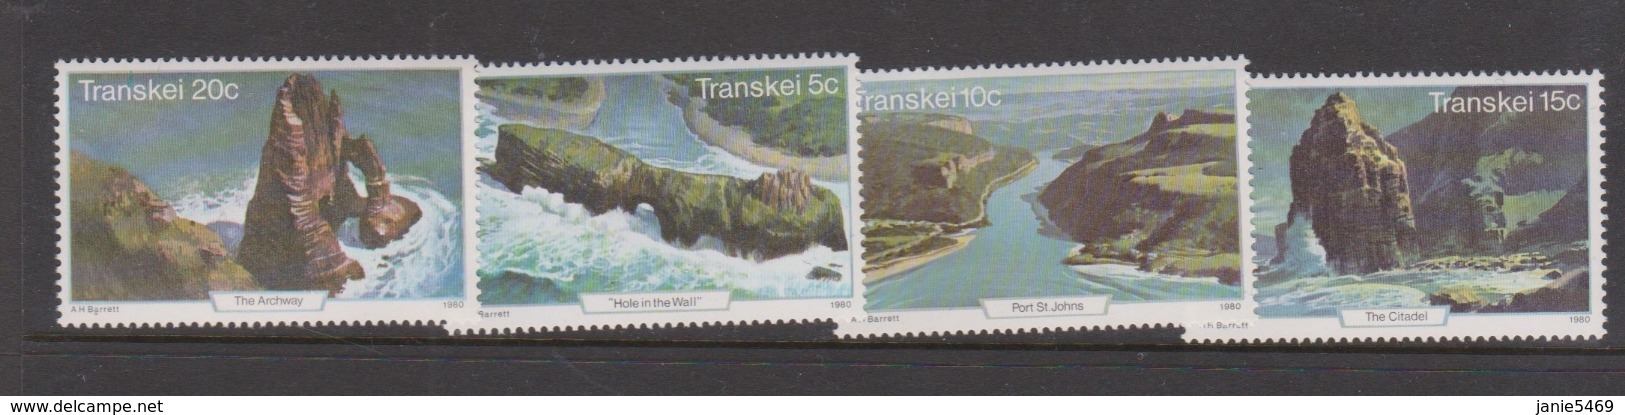 South Africa-Transkei SG 79-82 1980 Tourism,Mint Never Hinged - Transkei